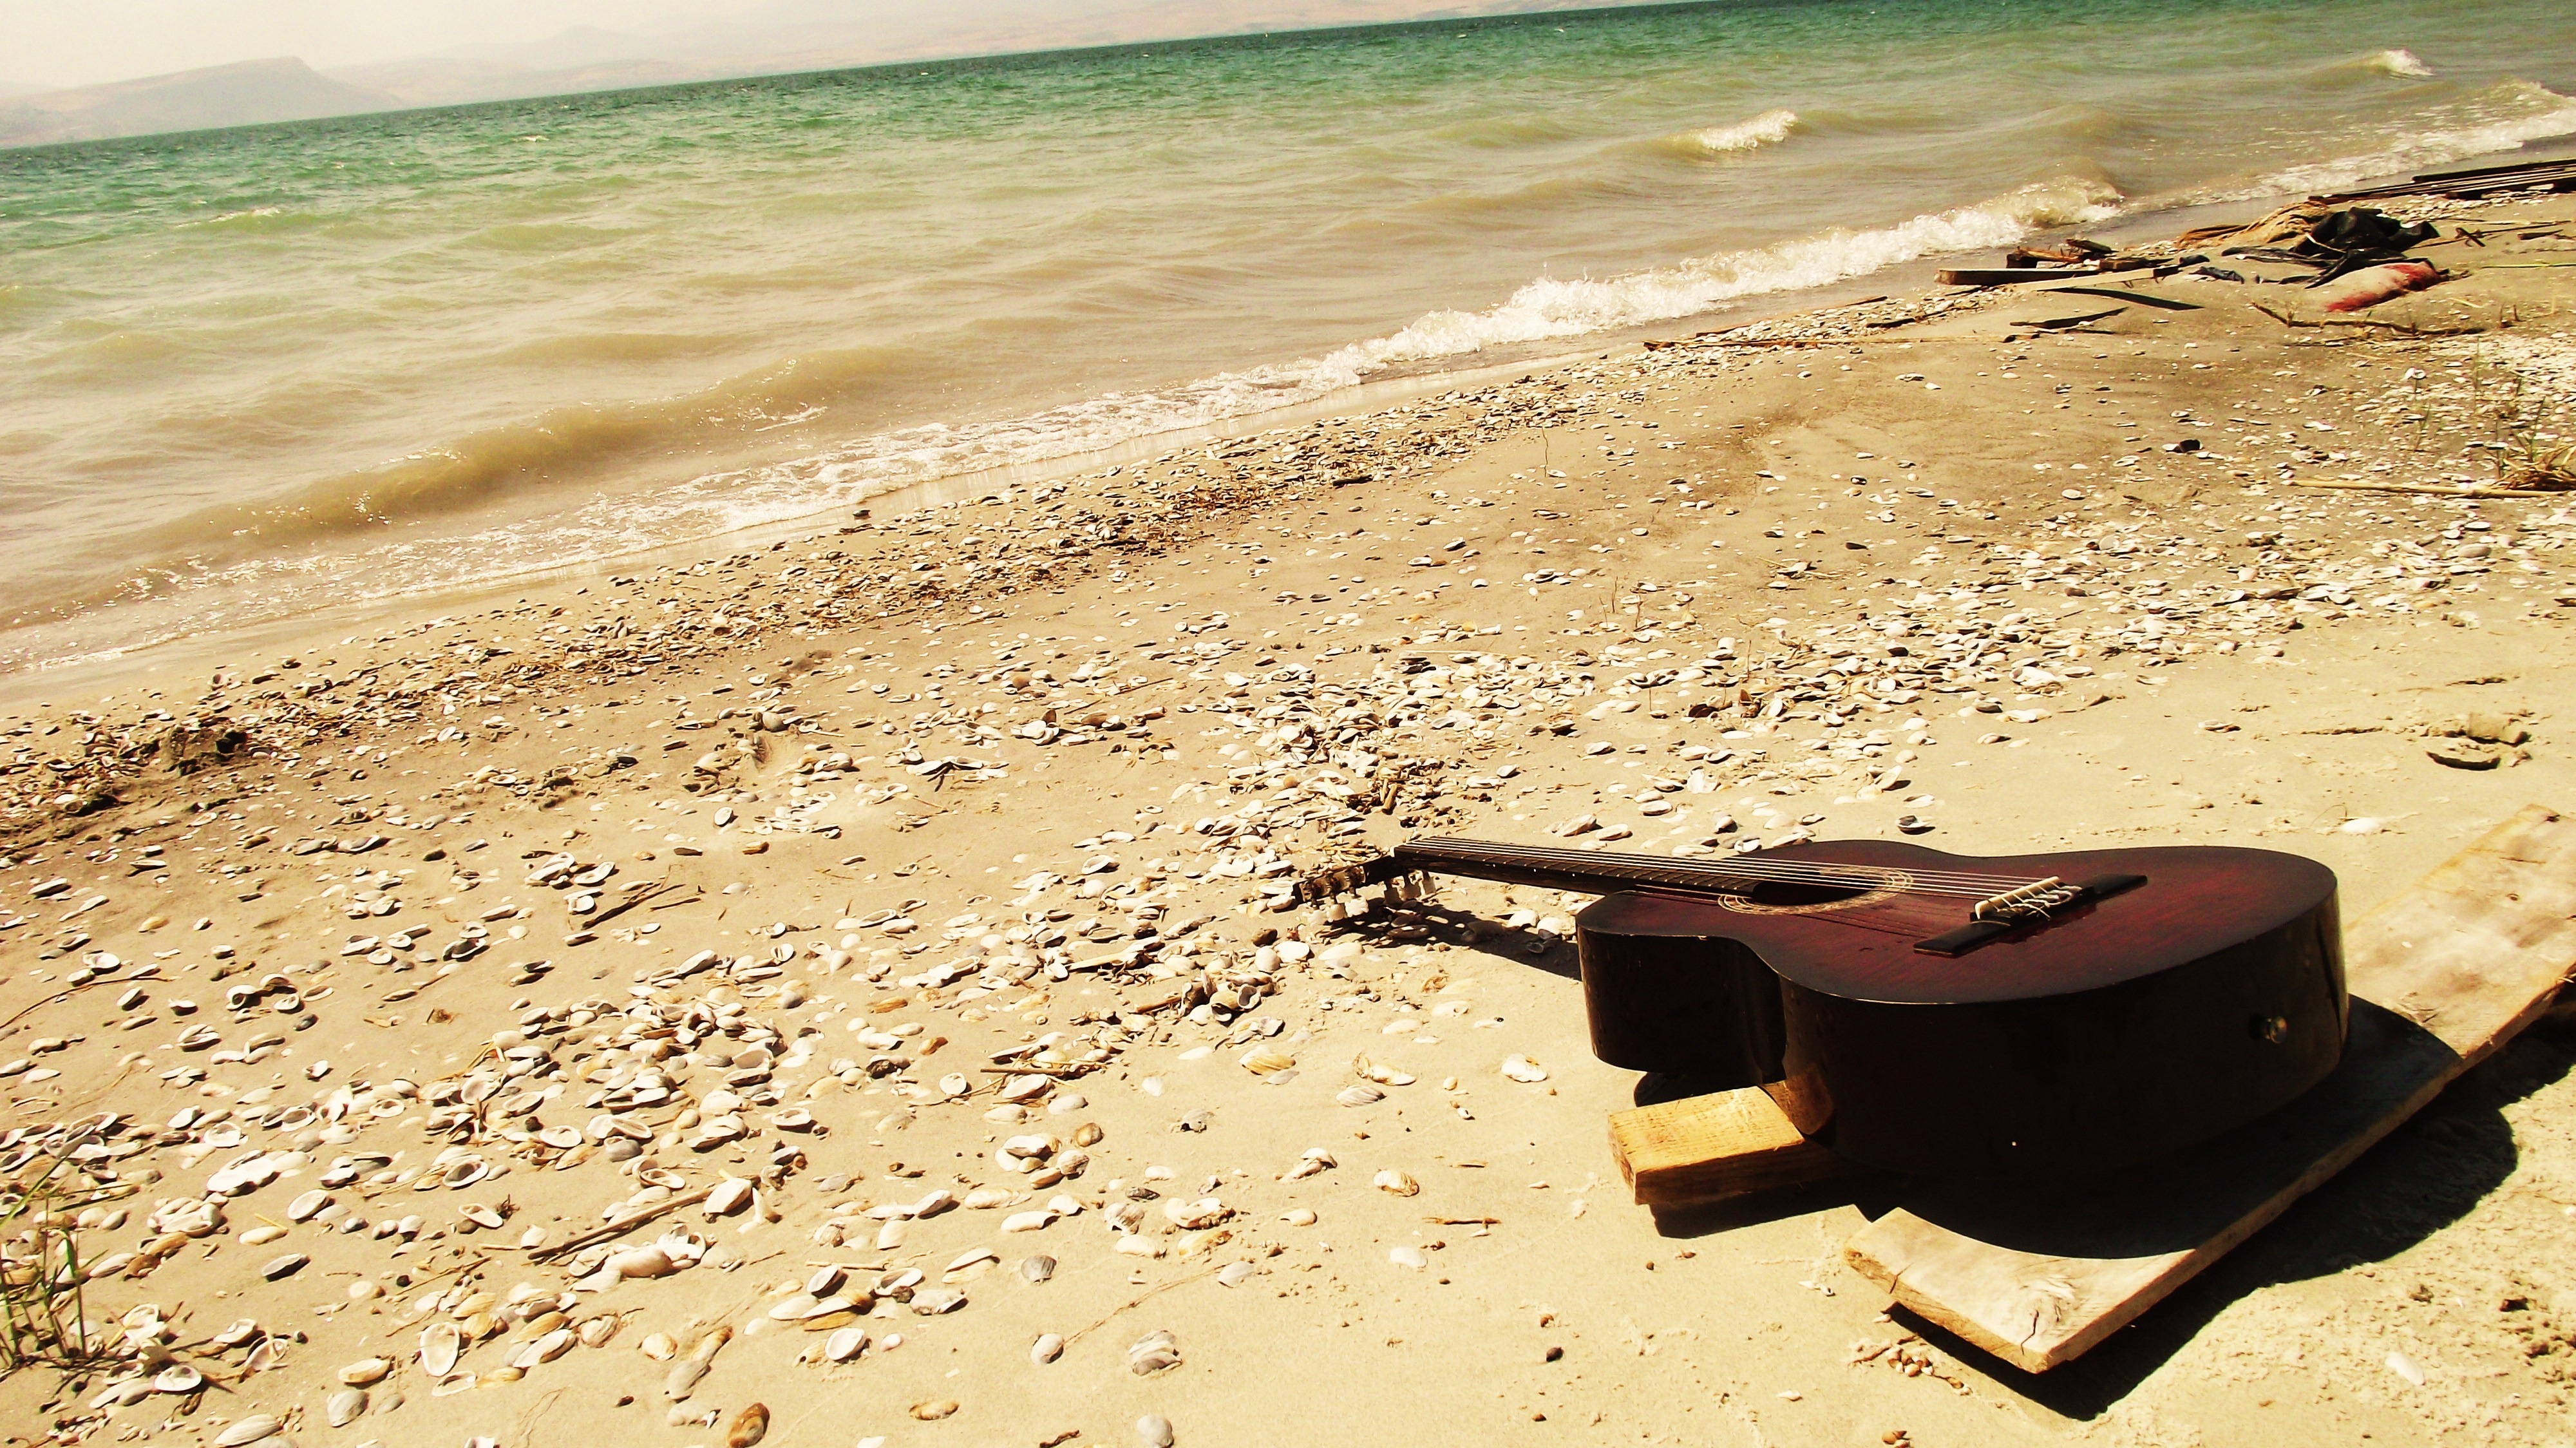 guitar, nature, stones, beach, sand, shore, bank, romance FHD, 4K, UHD